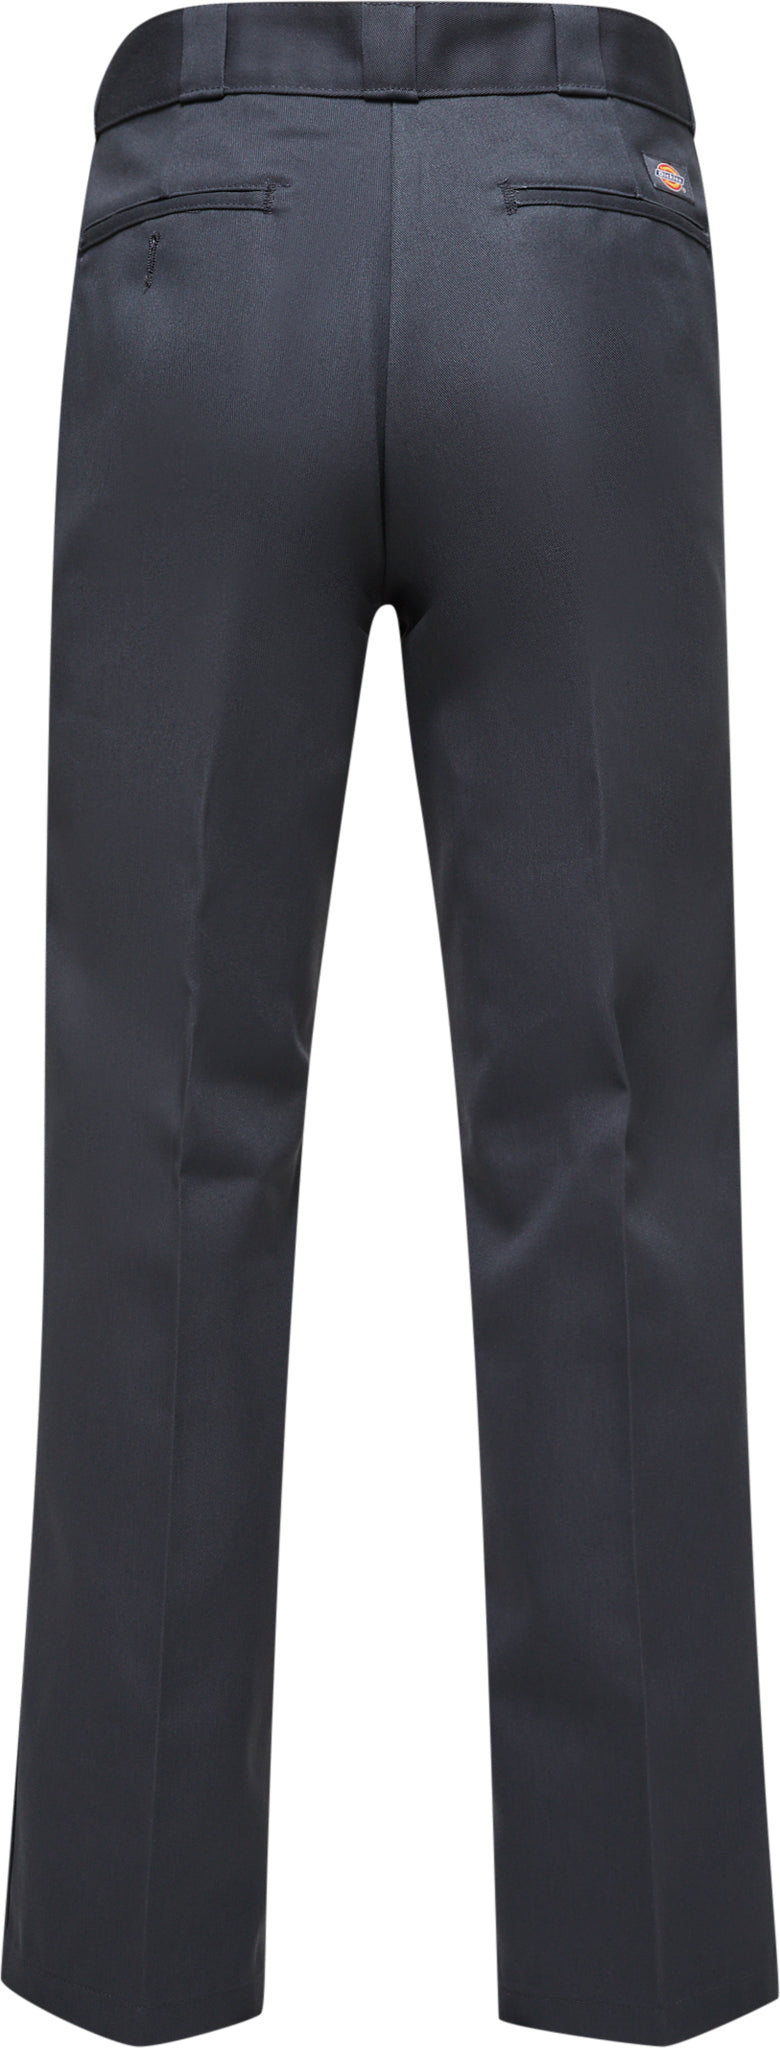 Theory Black Business Casual Cotton Dress Pants Size 12 Pockets Zipper Belt  Loop